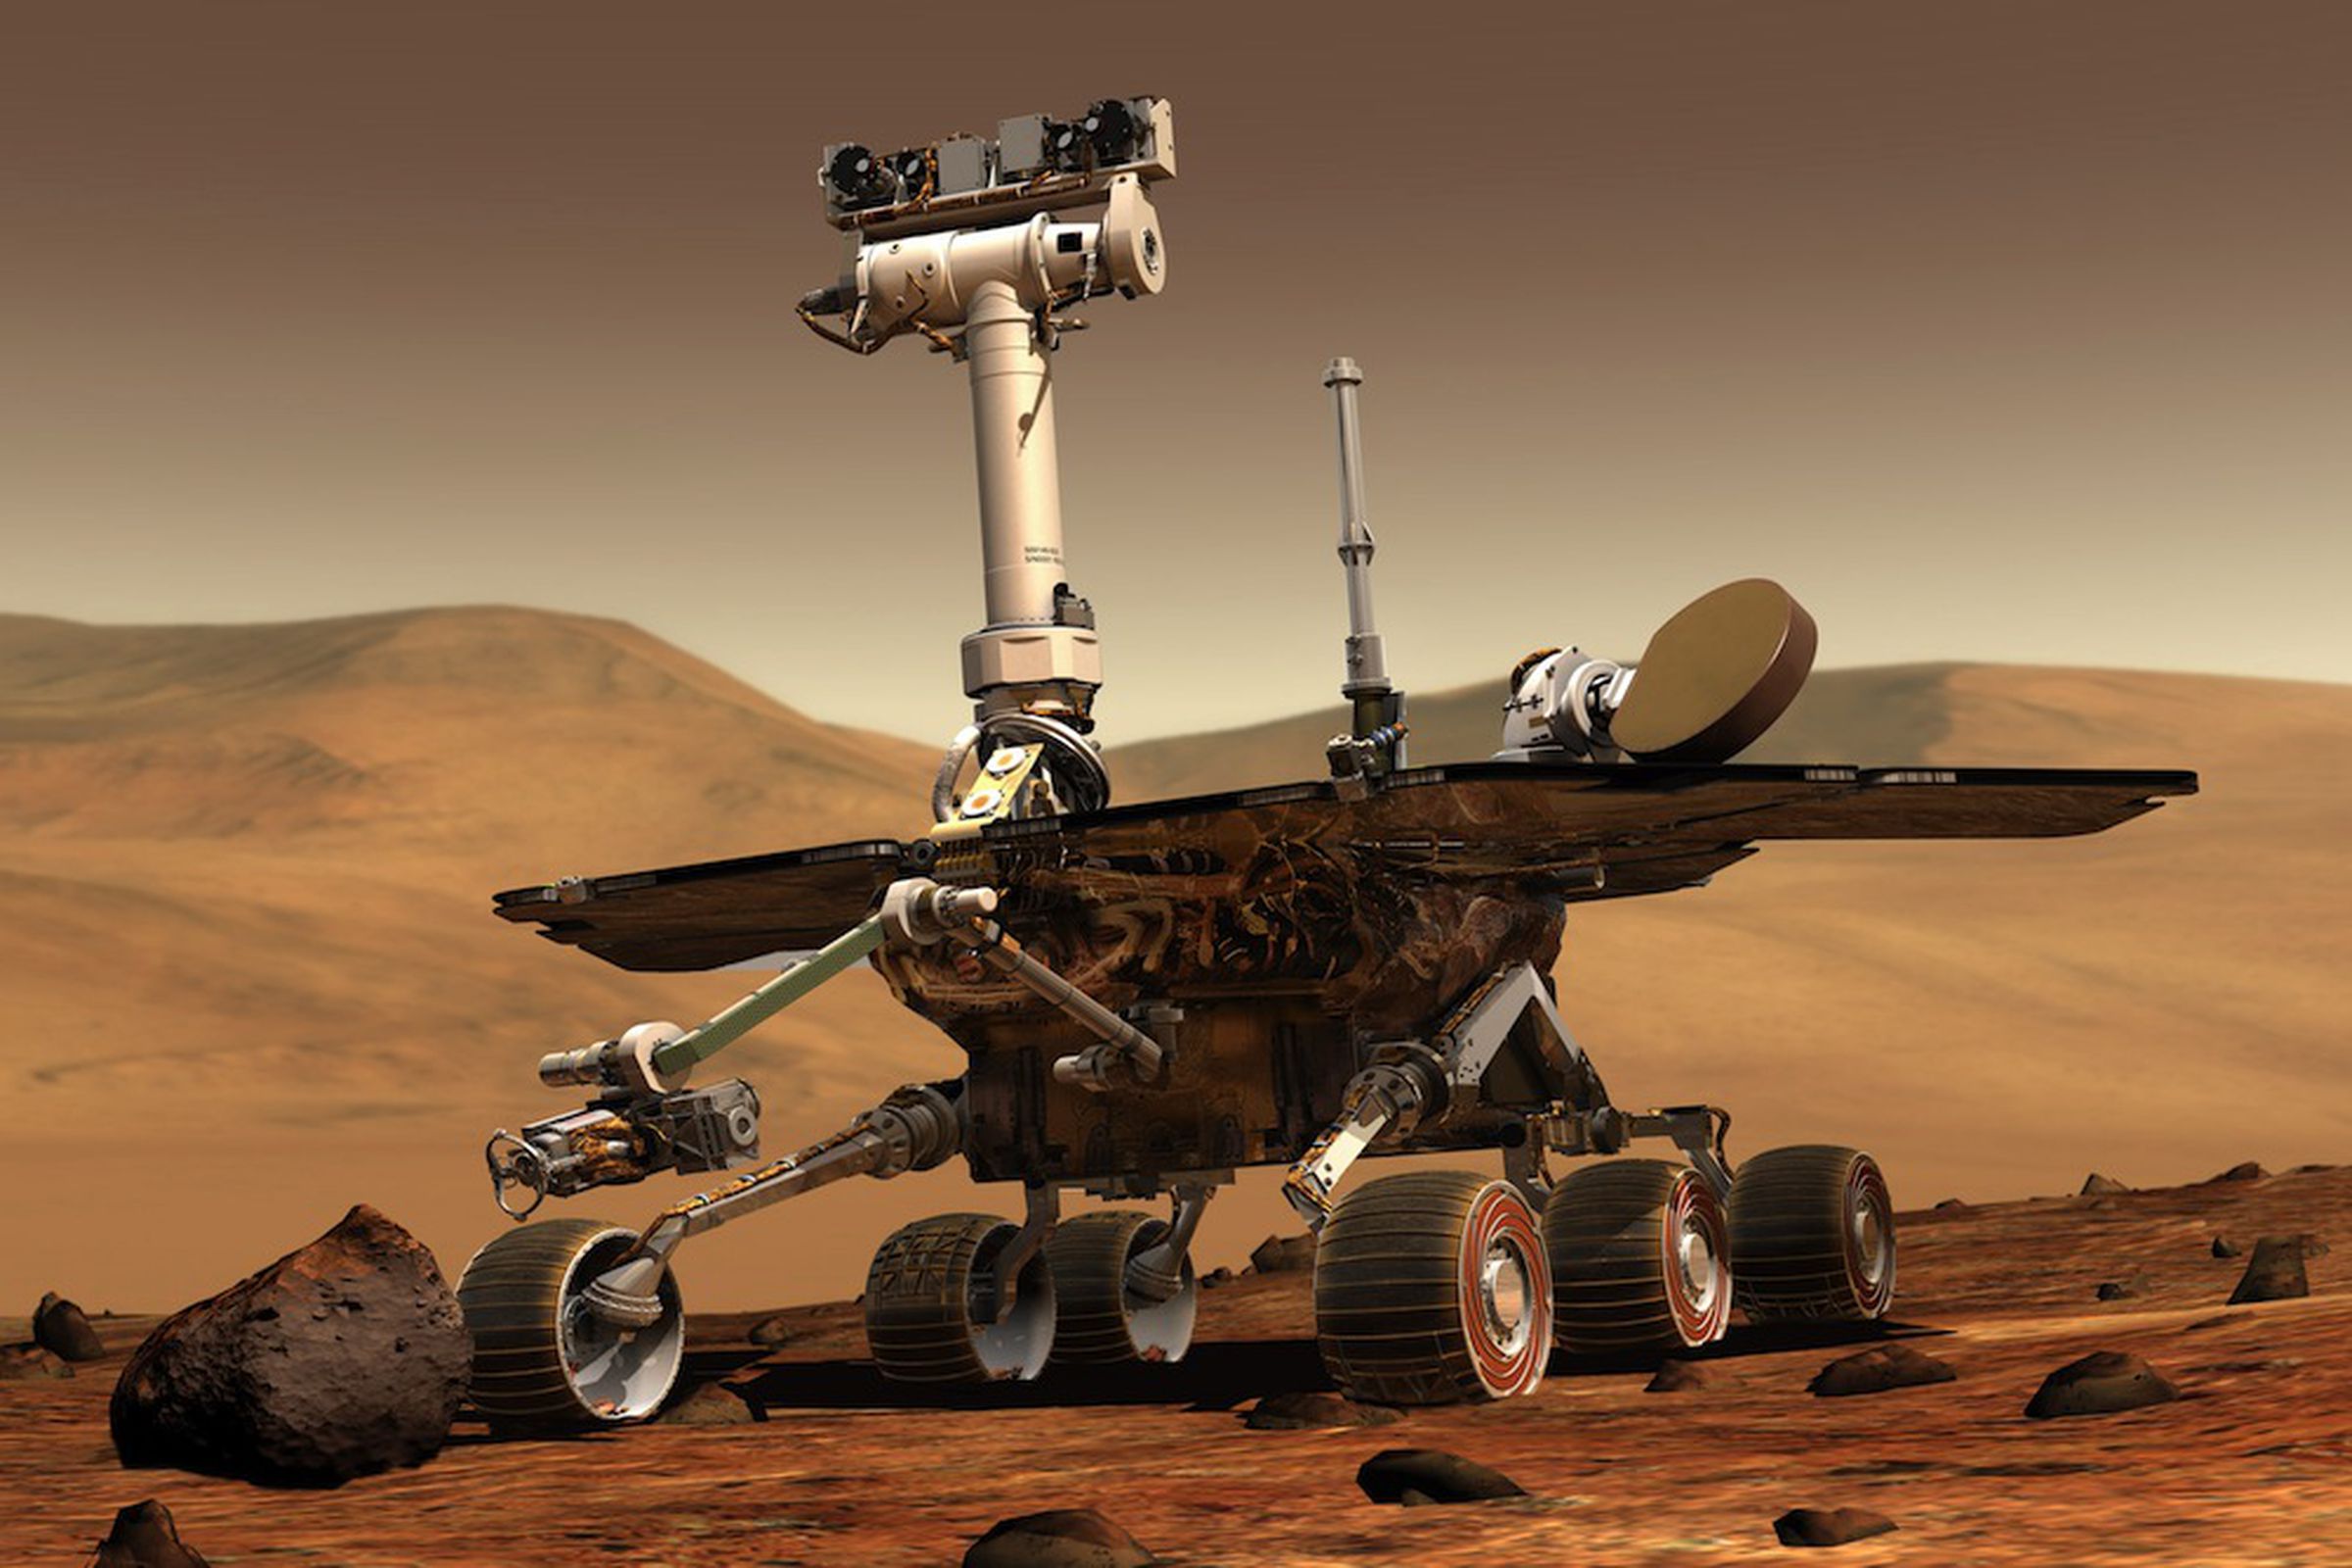 NASA Opportunity mars rover (Credit: NASA/JPL-Caltech)